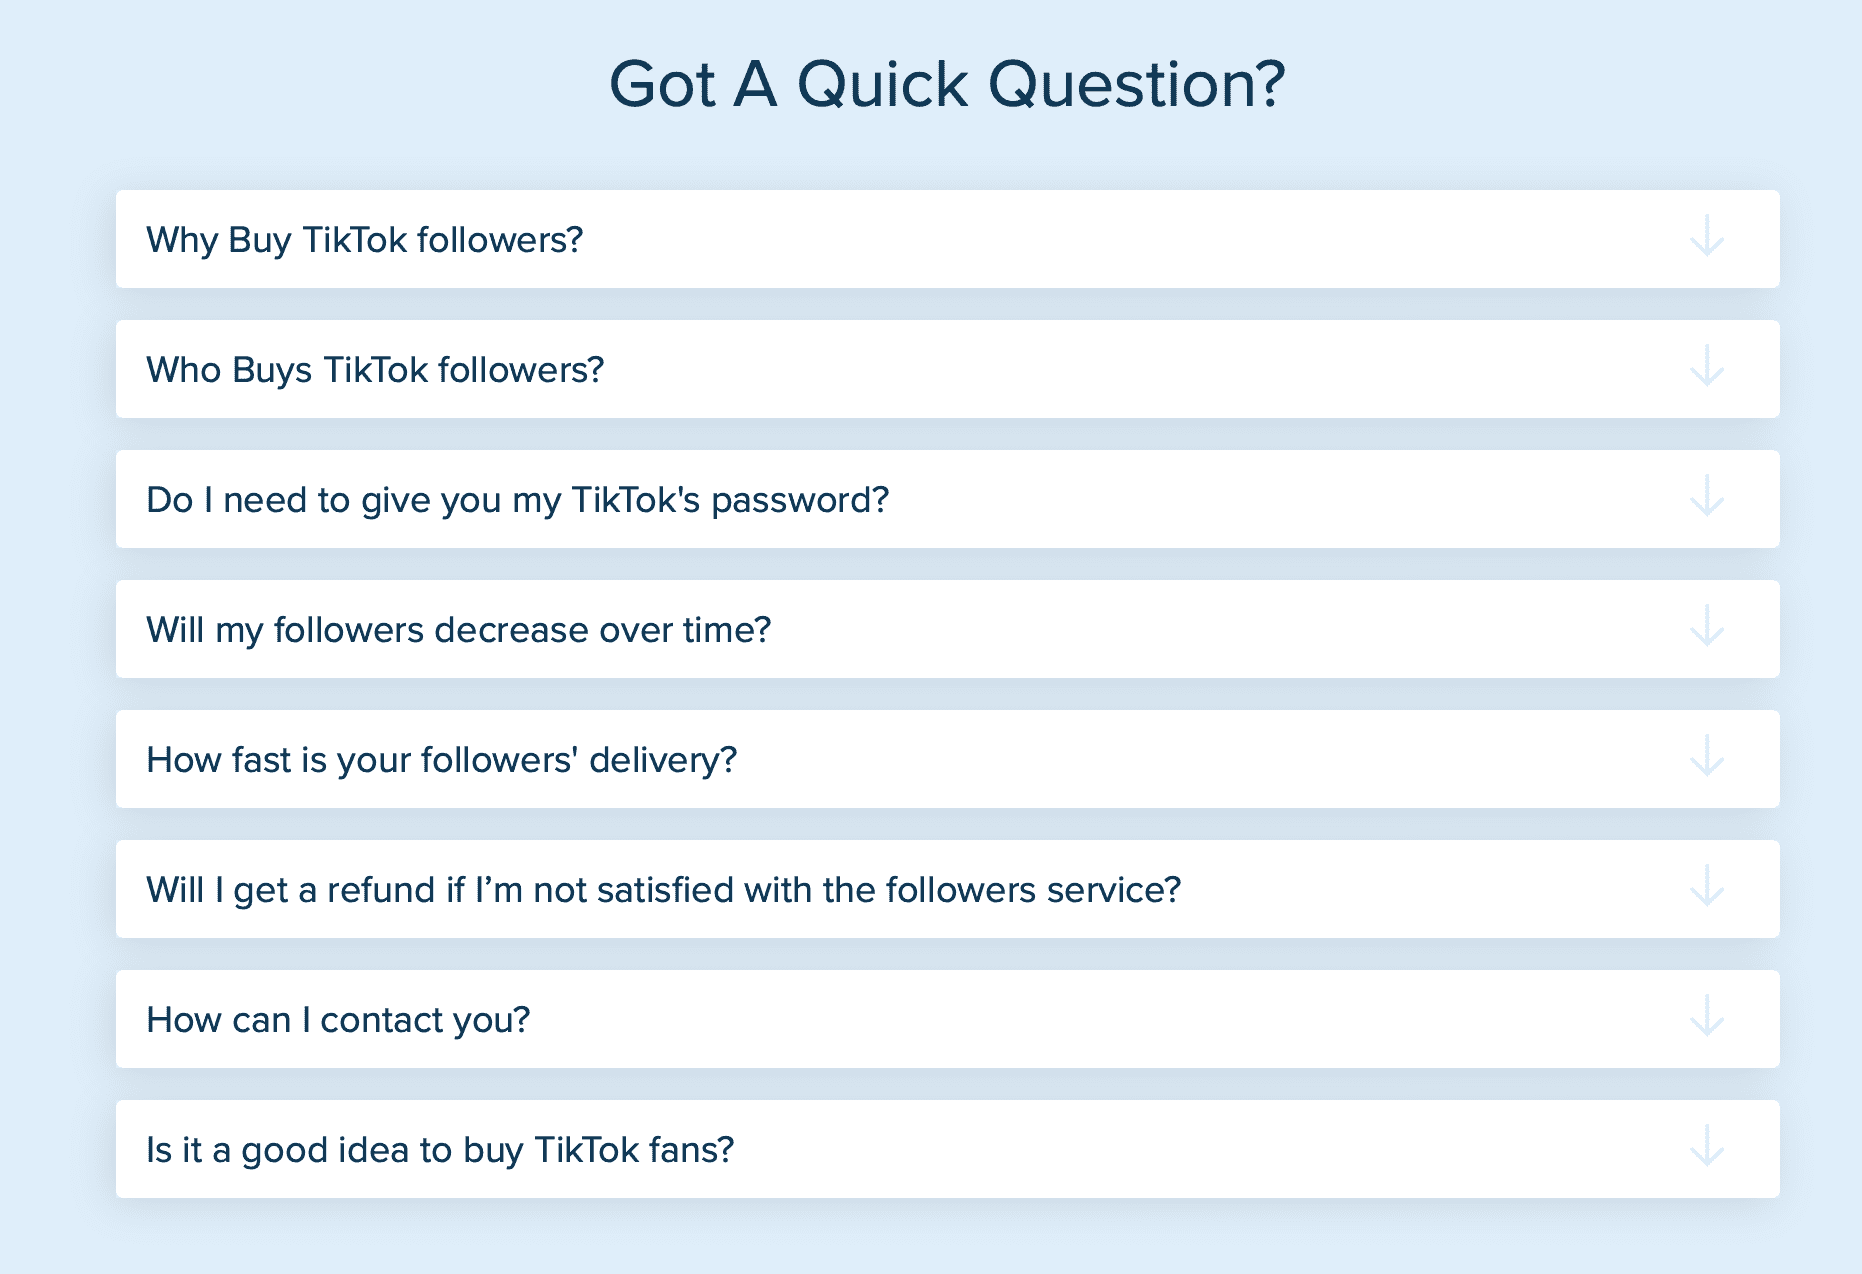 Got A Quick Question?